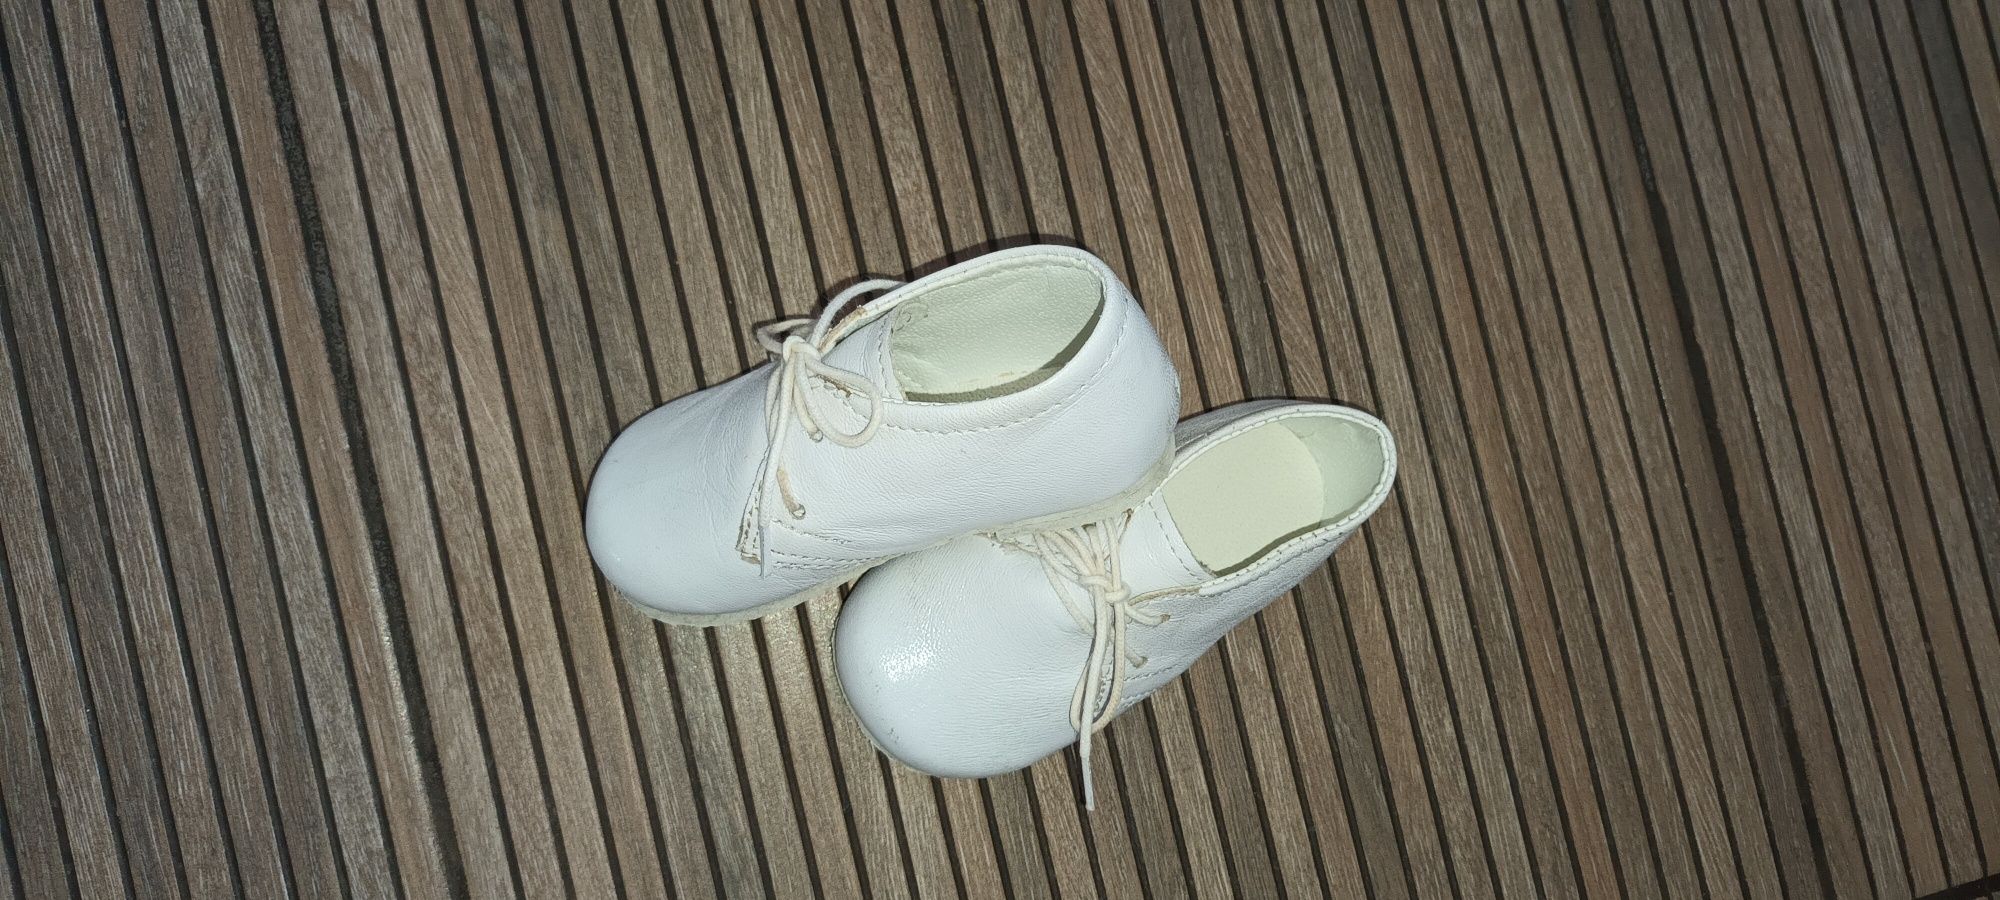 Buciki półbuciki baletki białe chrzest 19 - 12,5cmcm